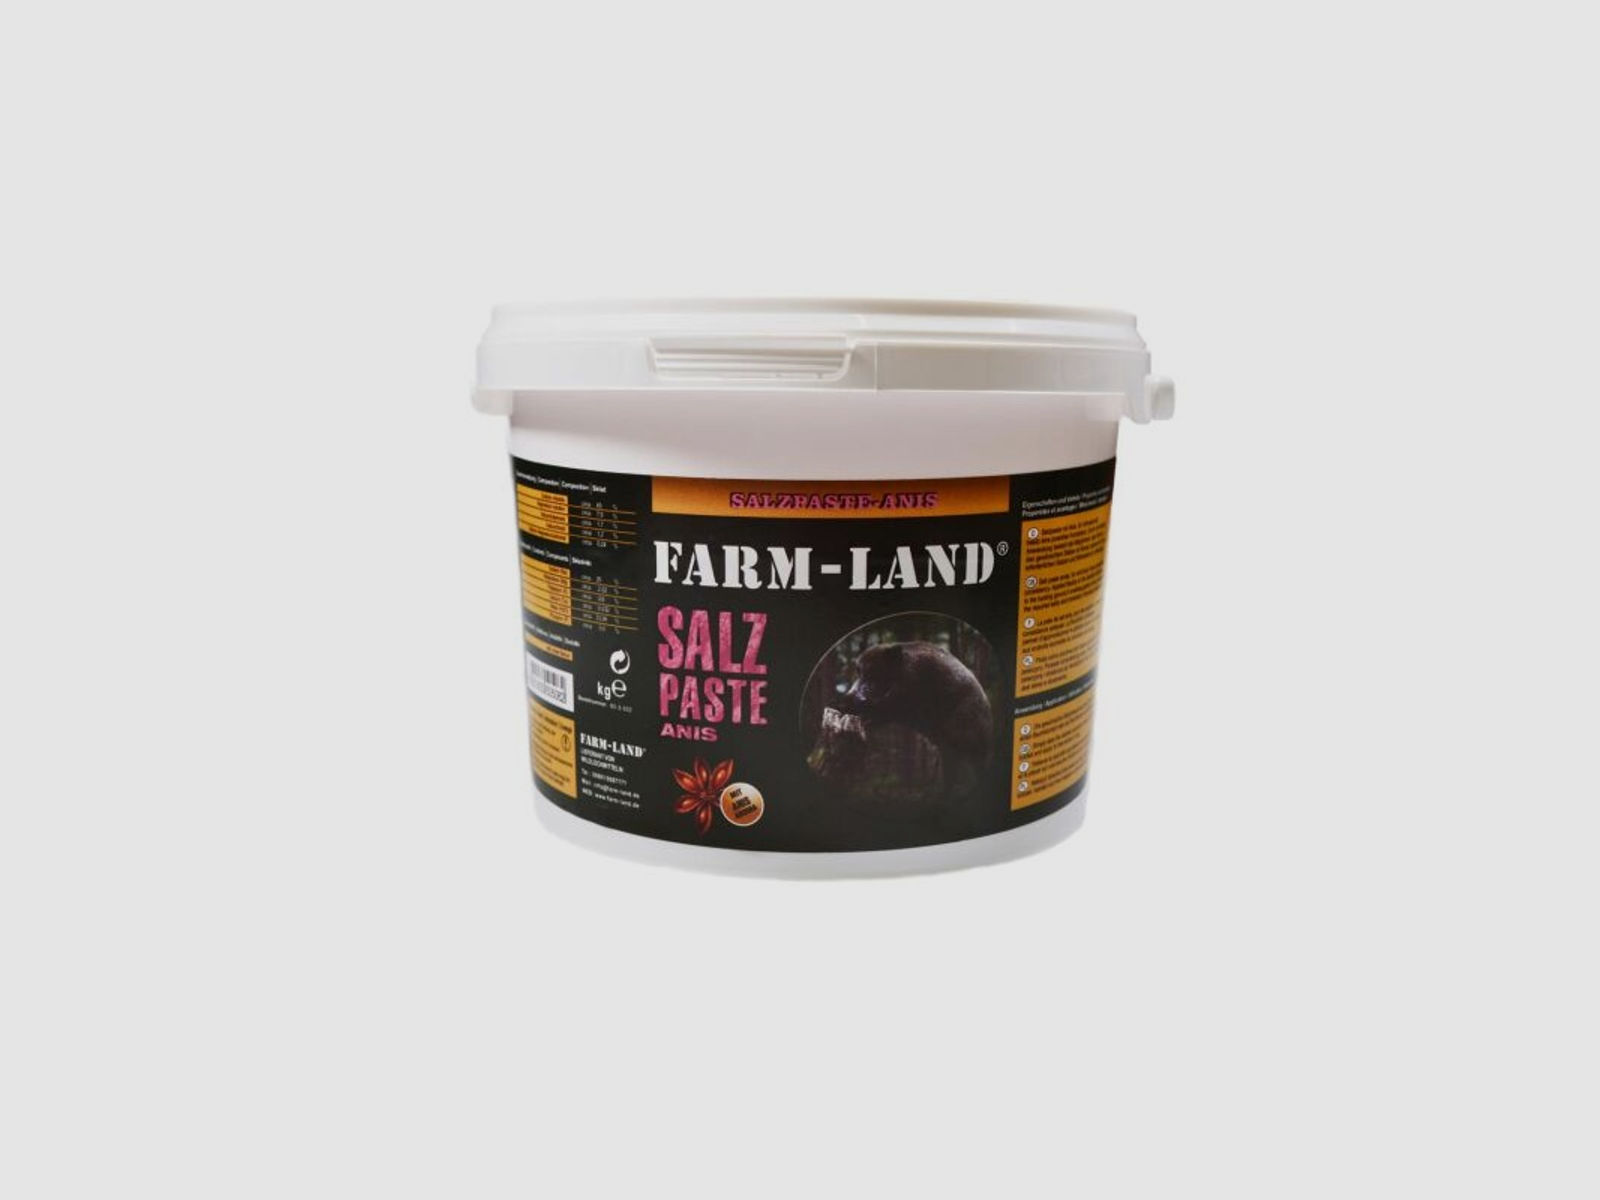 Farm-Land Salzpaste Anis 2,5 kg